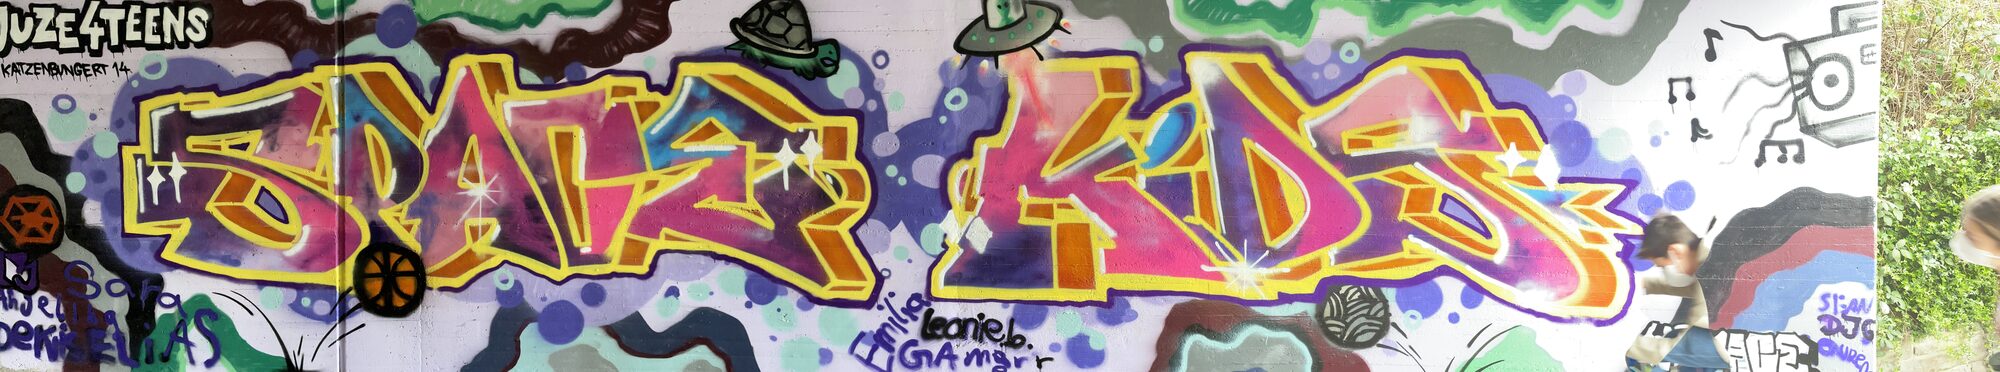 Graffiti in Bergheim, erstellt im Rahmen des Kulturrucksacks